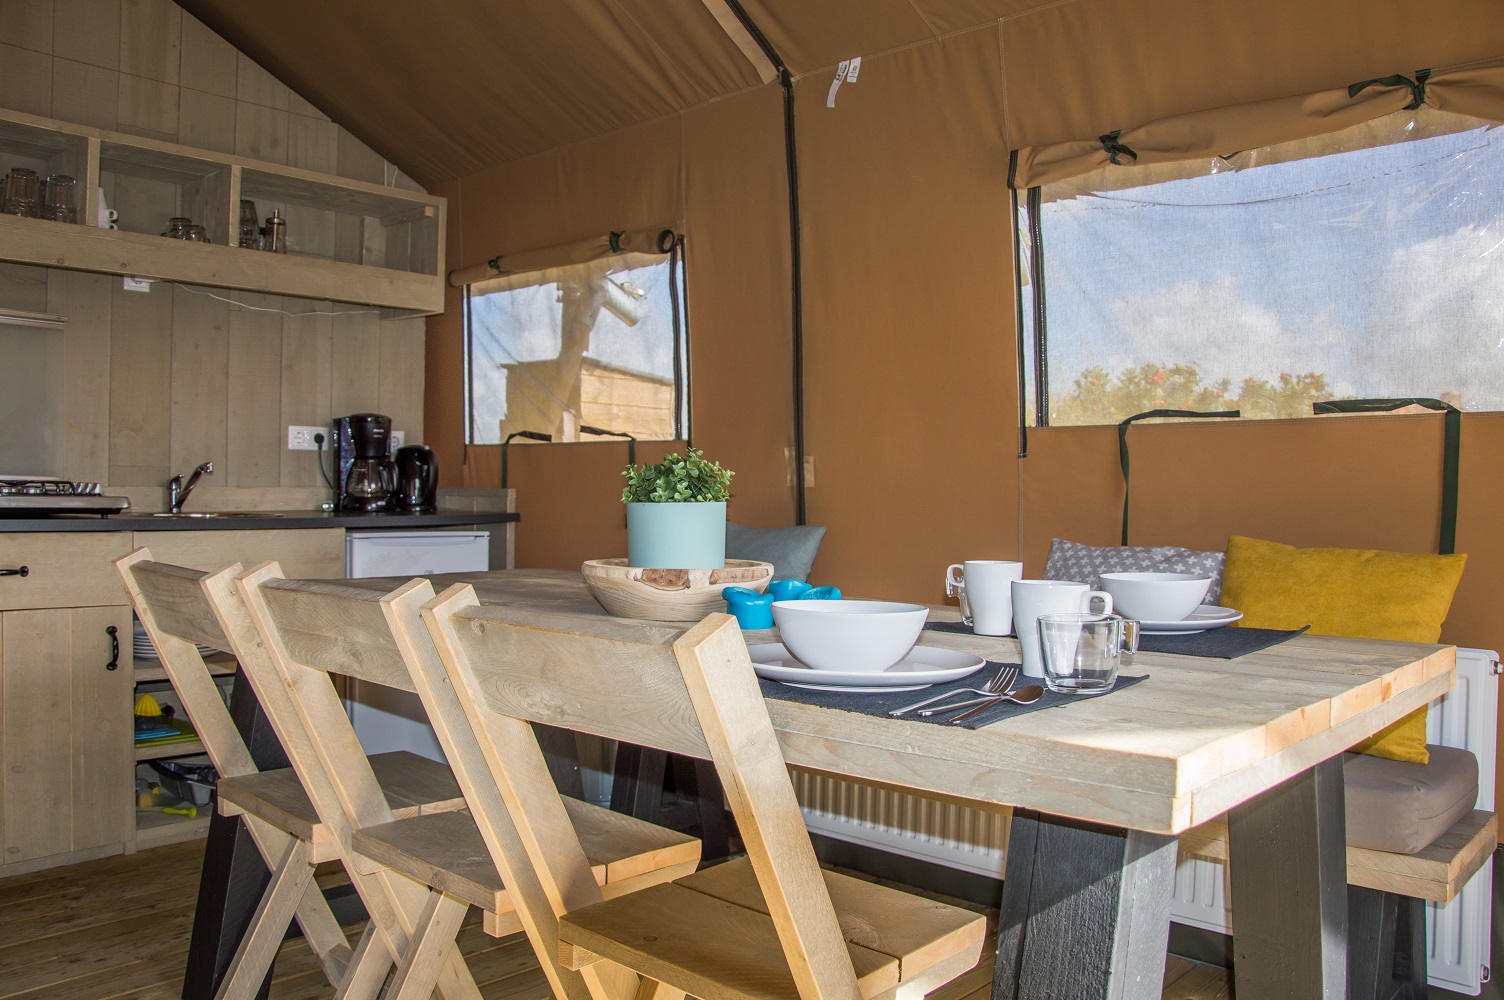 Location - Bobbies Lodge Premium - Camping Beringerzand